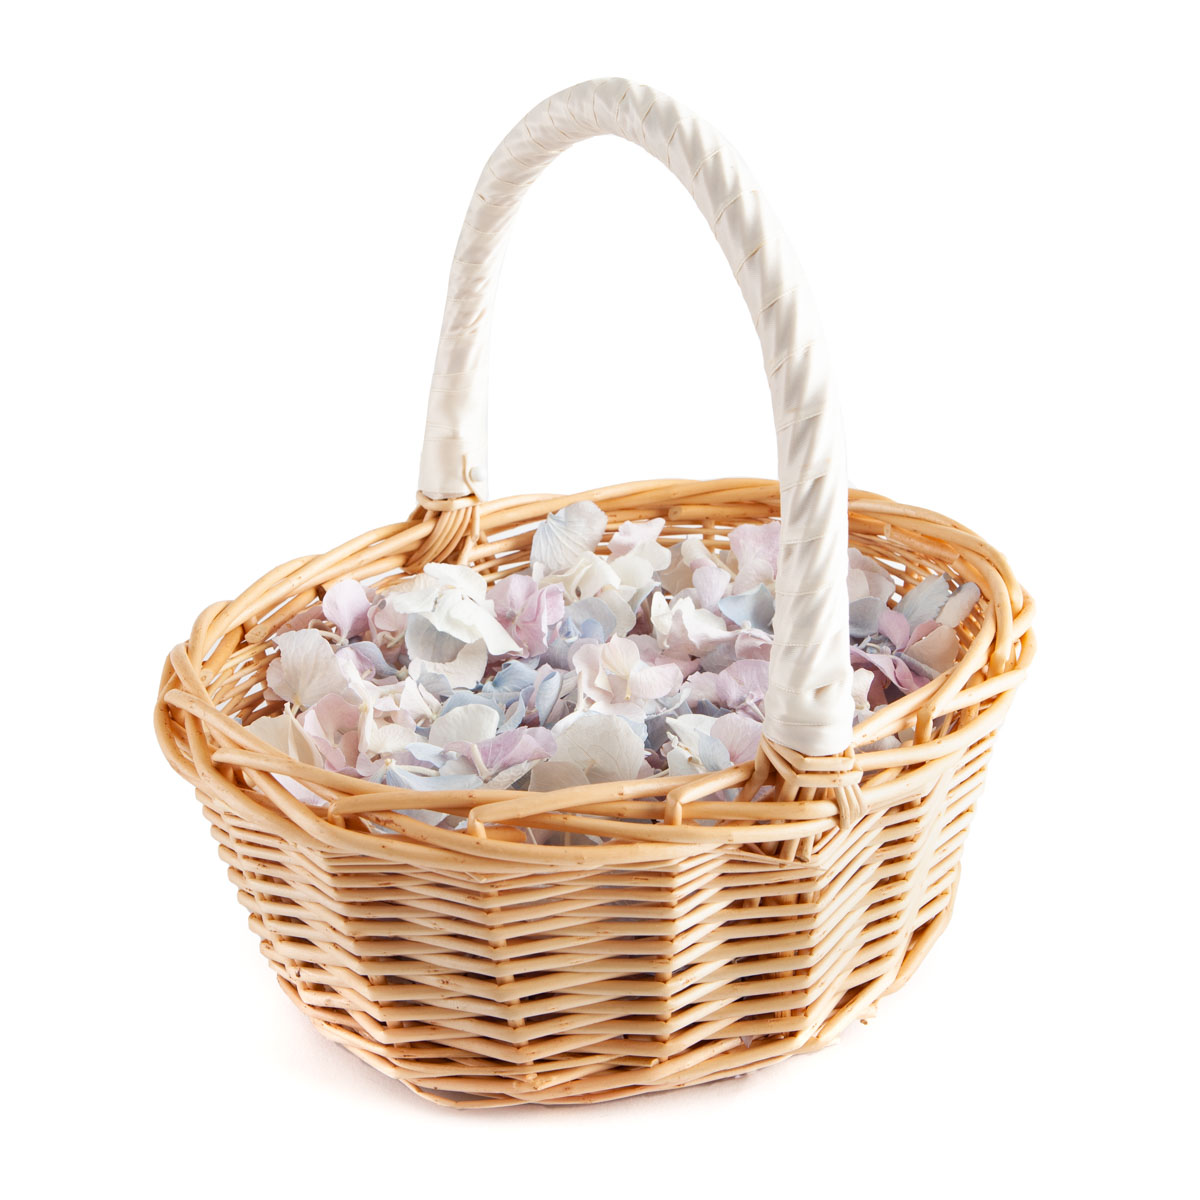 Biodegradable Confetti - Lilac, Blue & White Hydrangea Petals - Flower Girl Basket